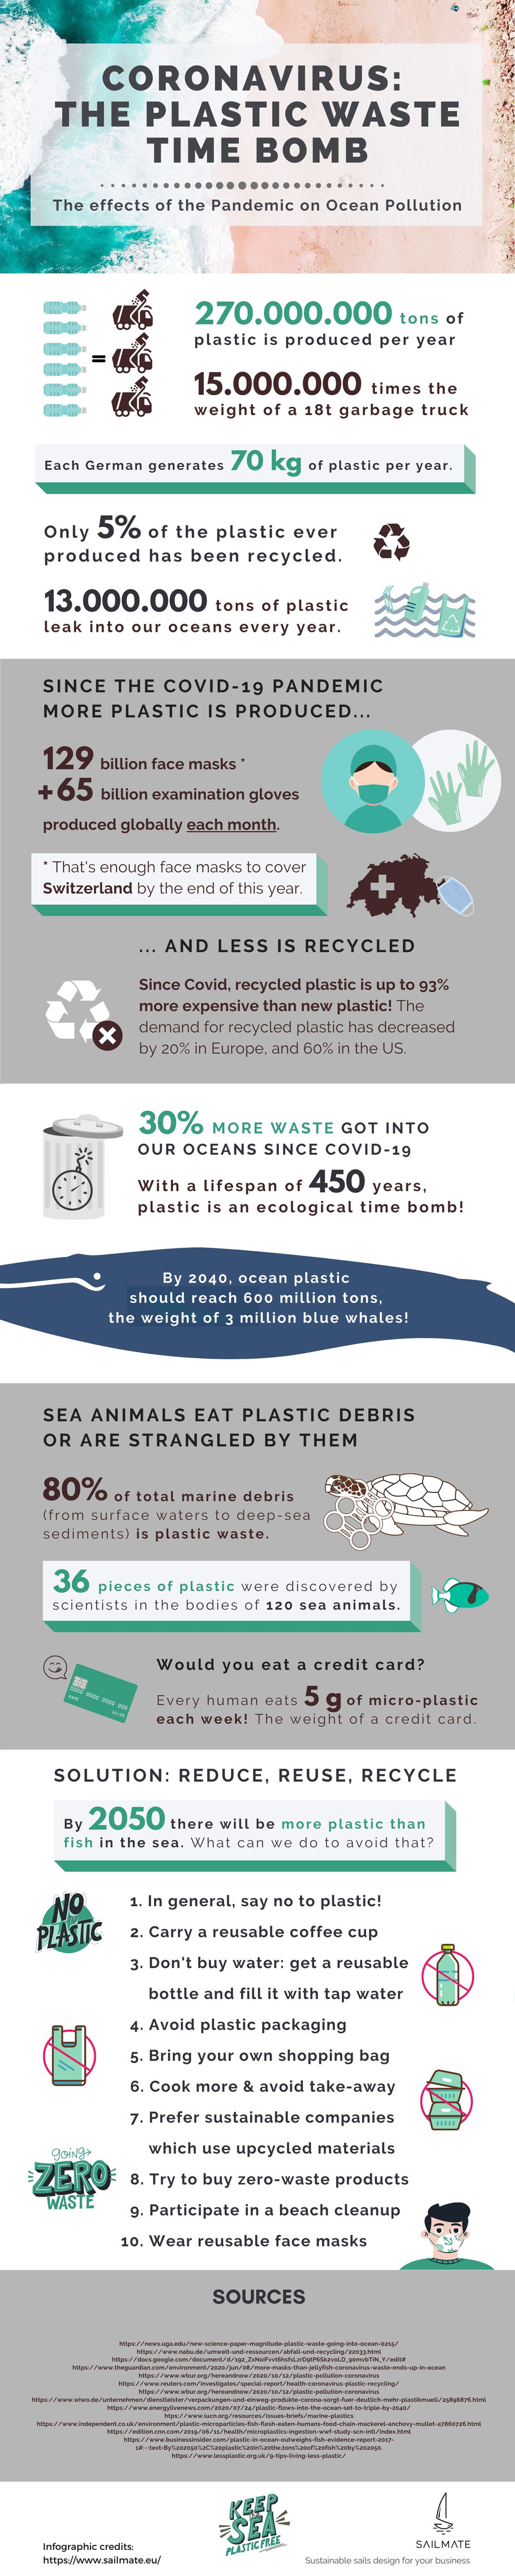 Infographic from Sailmate: Coronavirus, the plastic waste time bomb